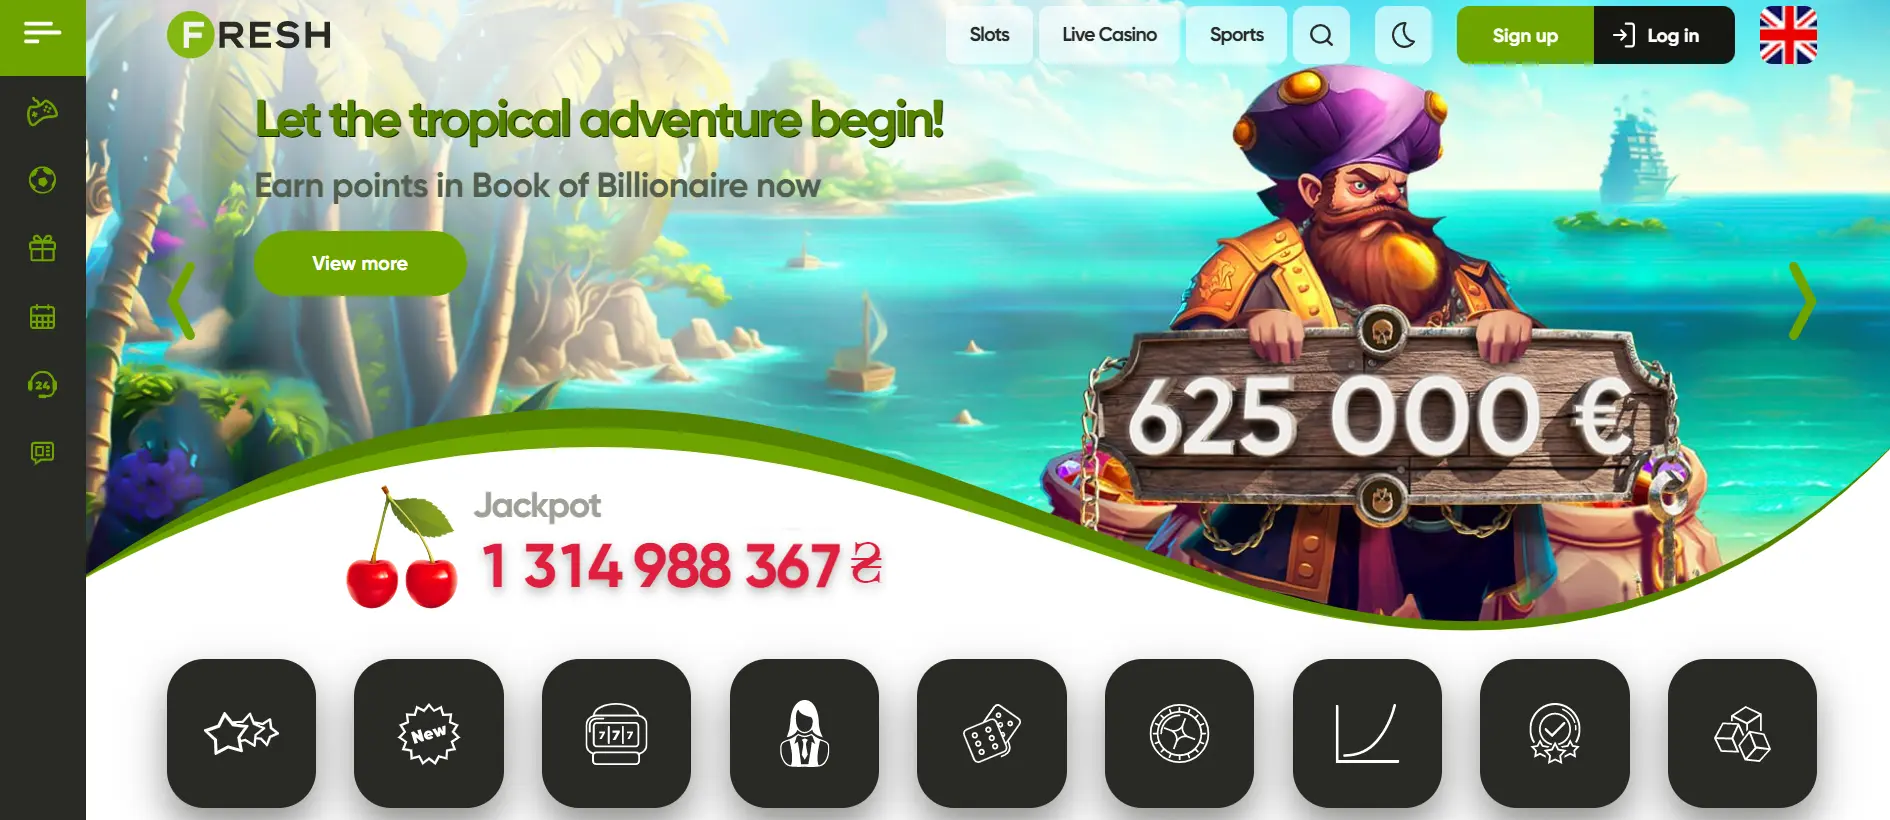 Fresh Casino - Screenshot from Official Site